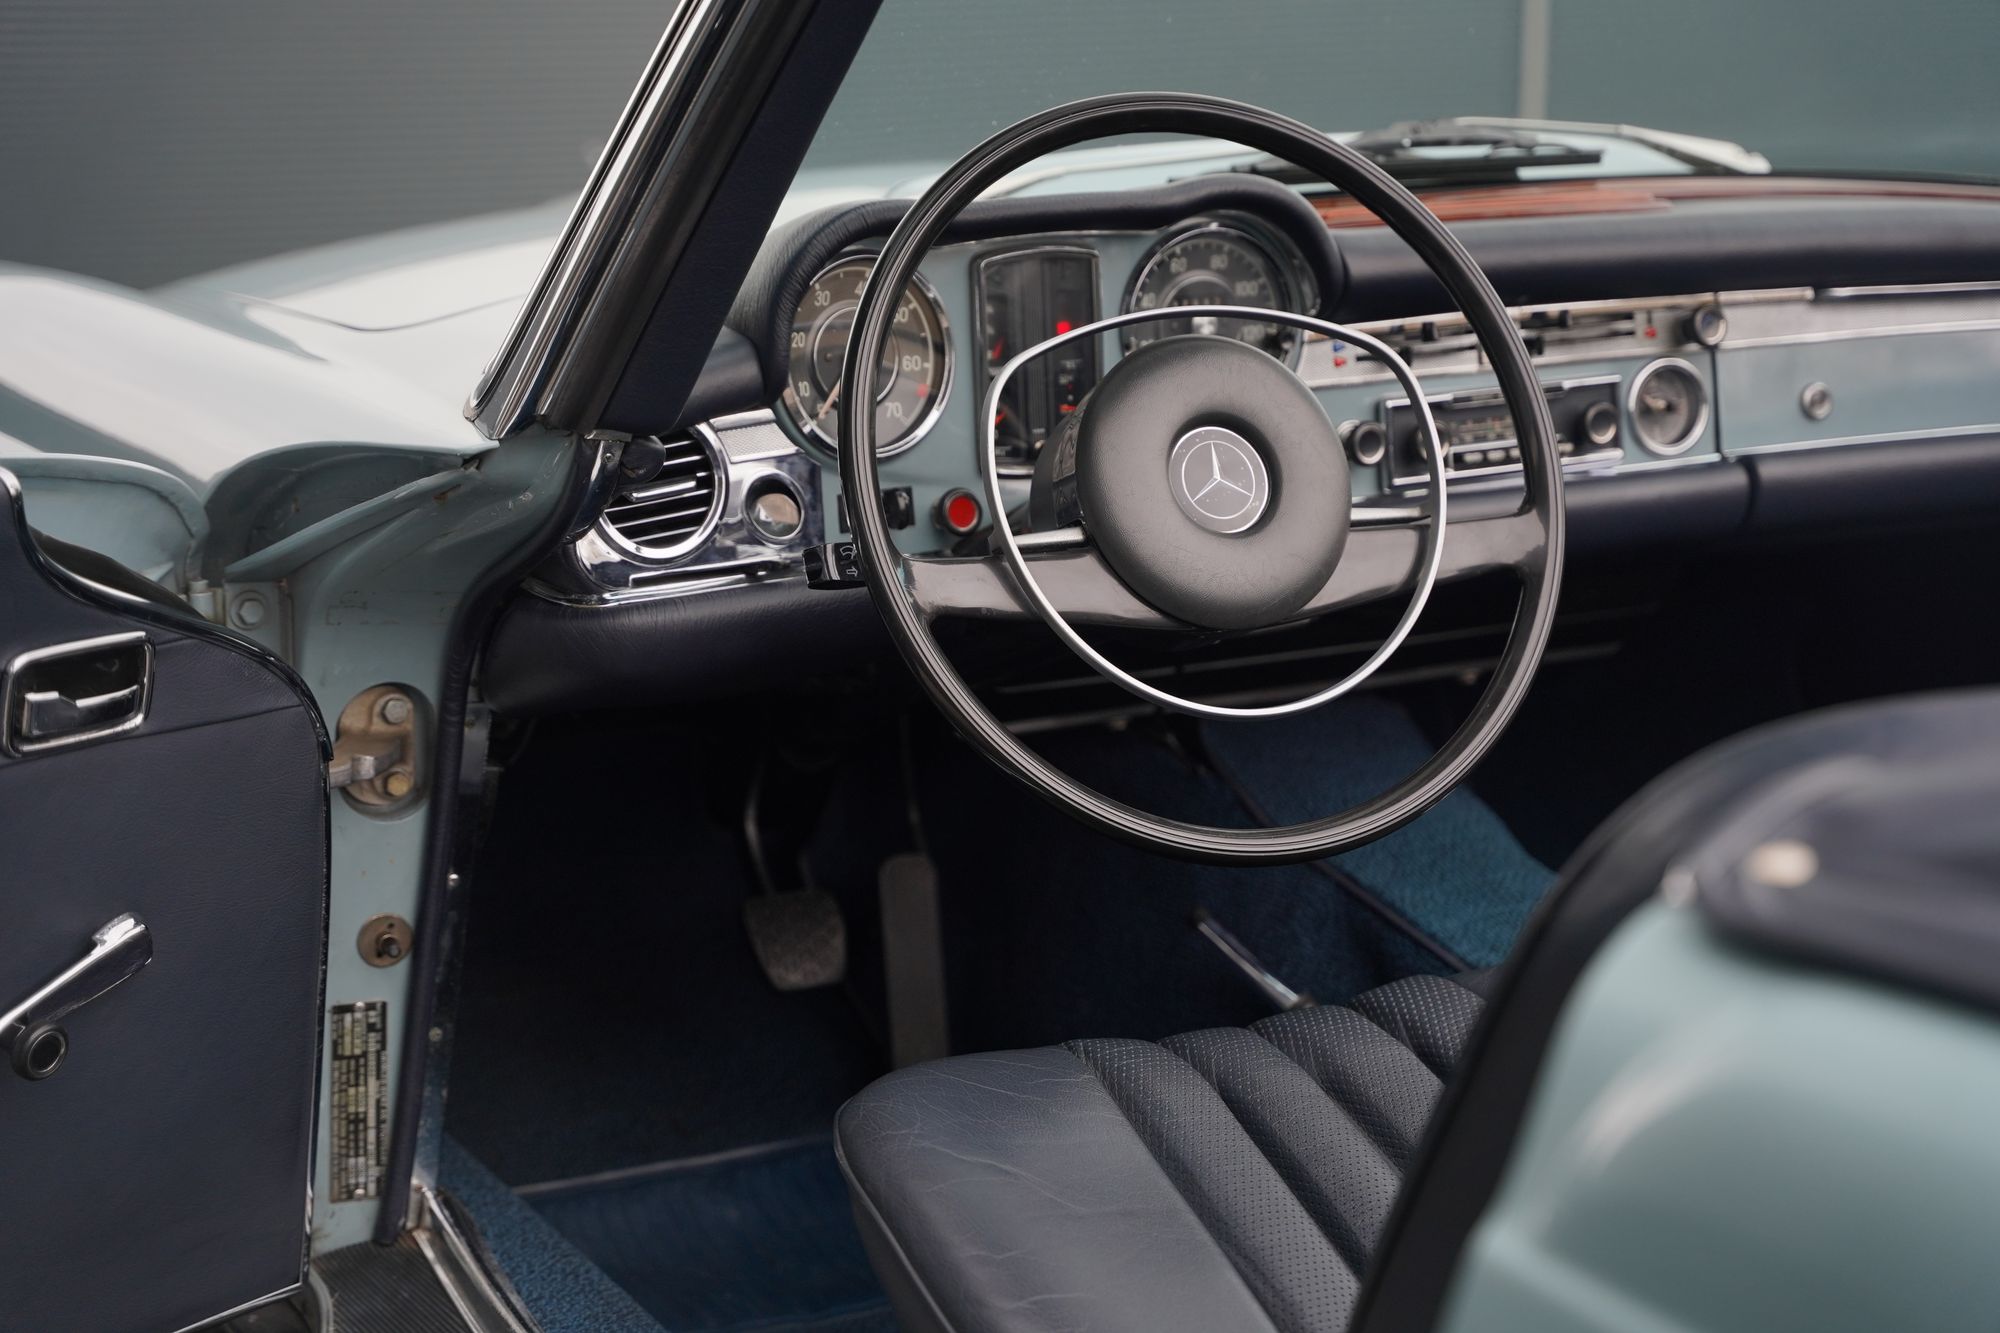 1968 Mercedes-Benz W113 280SL Pagoda 'California'